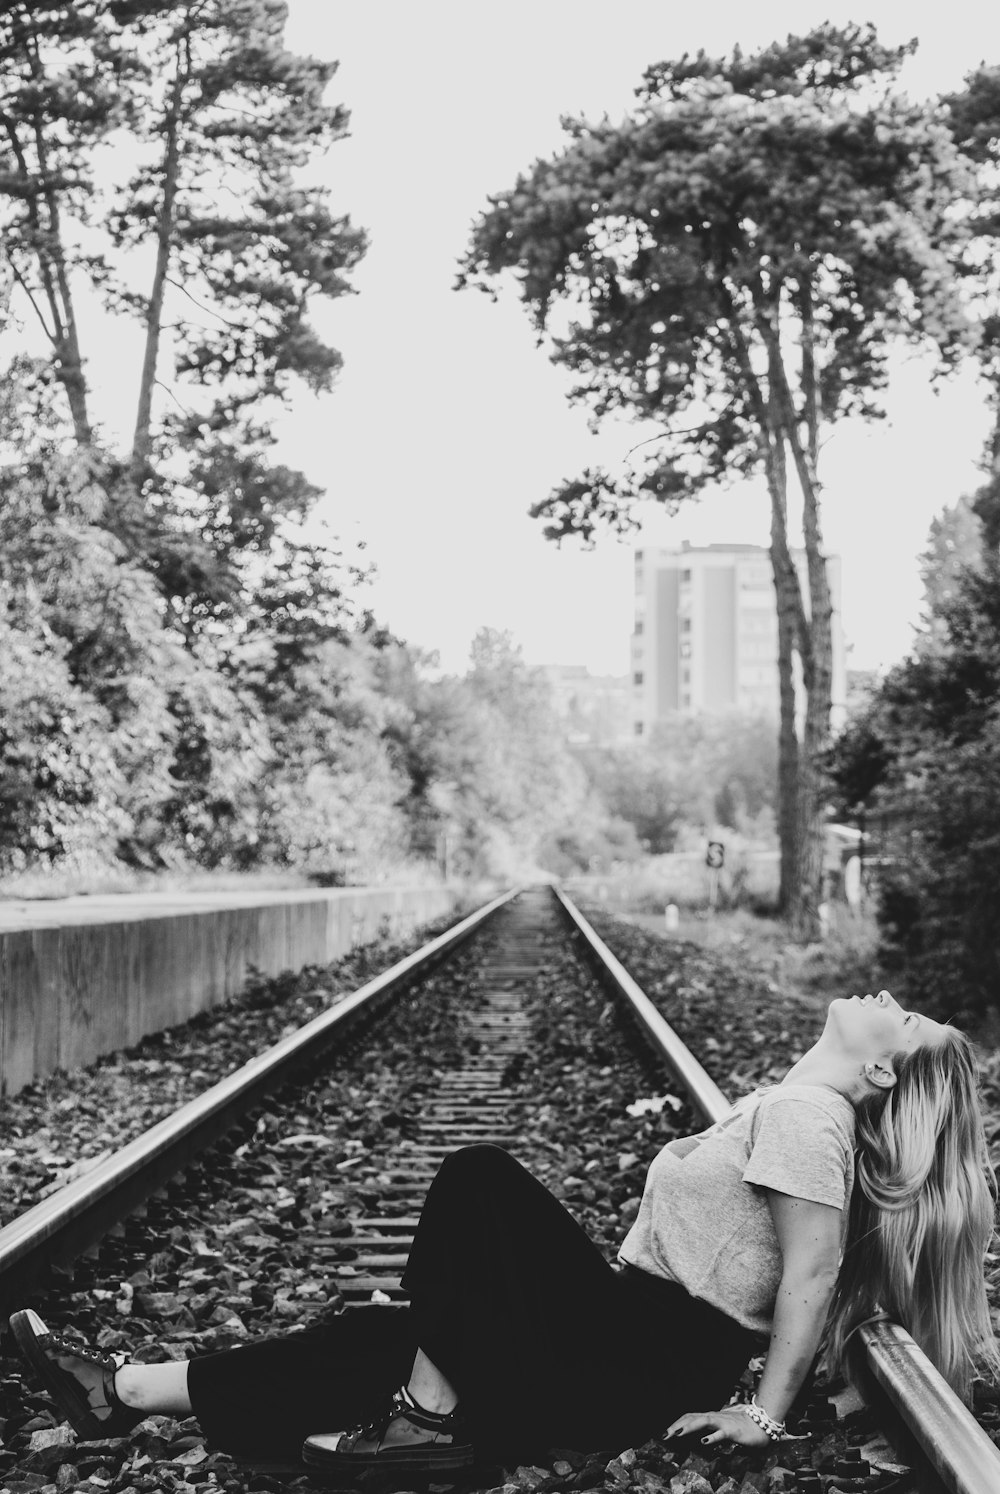 grayscale photo of woman sitting on train rail